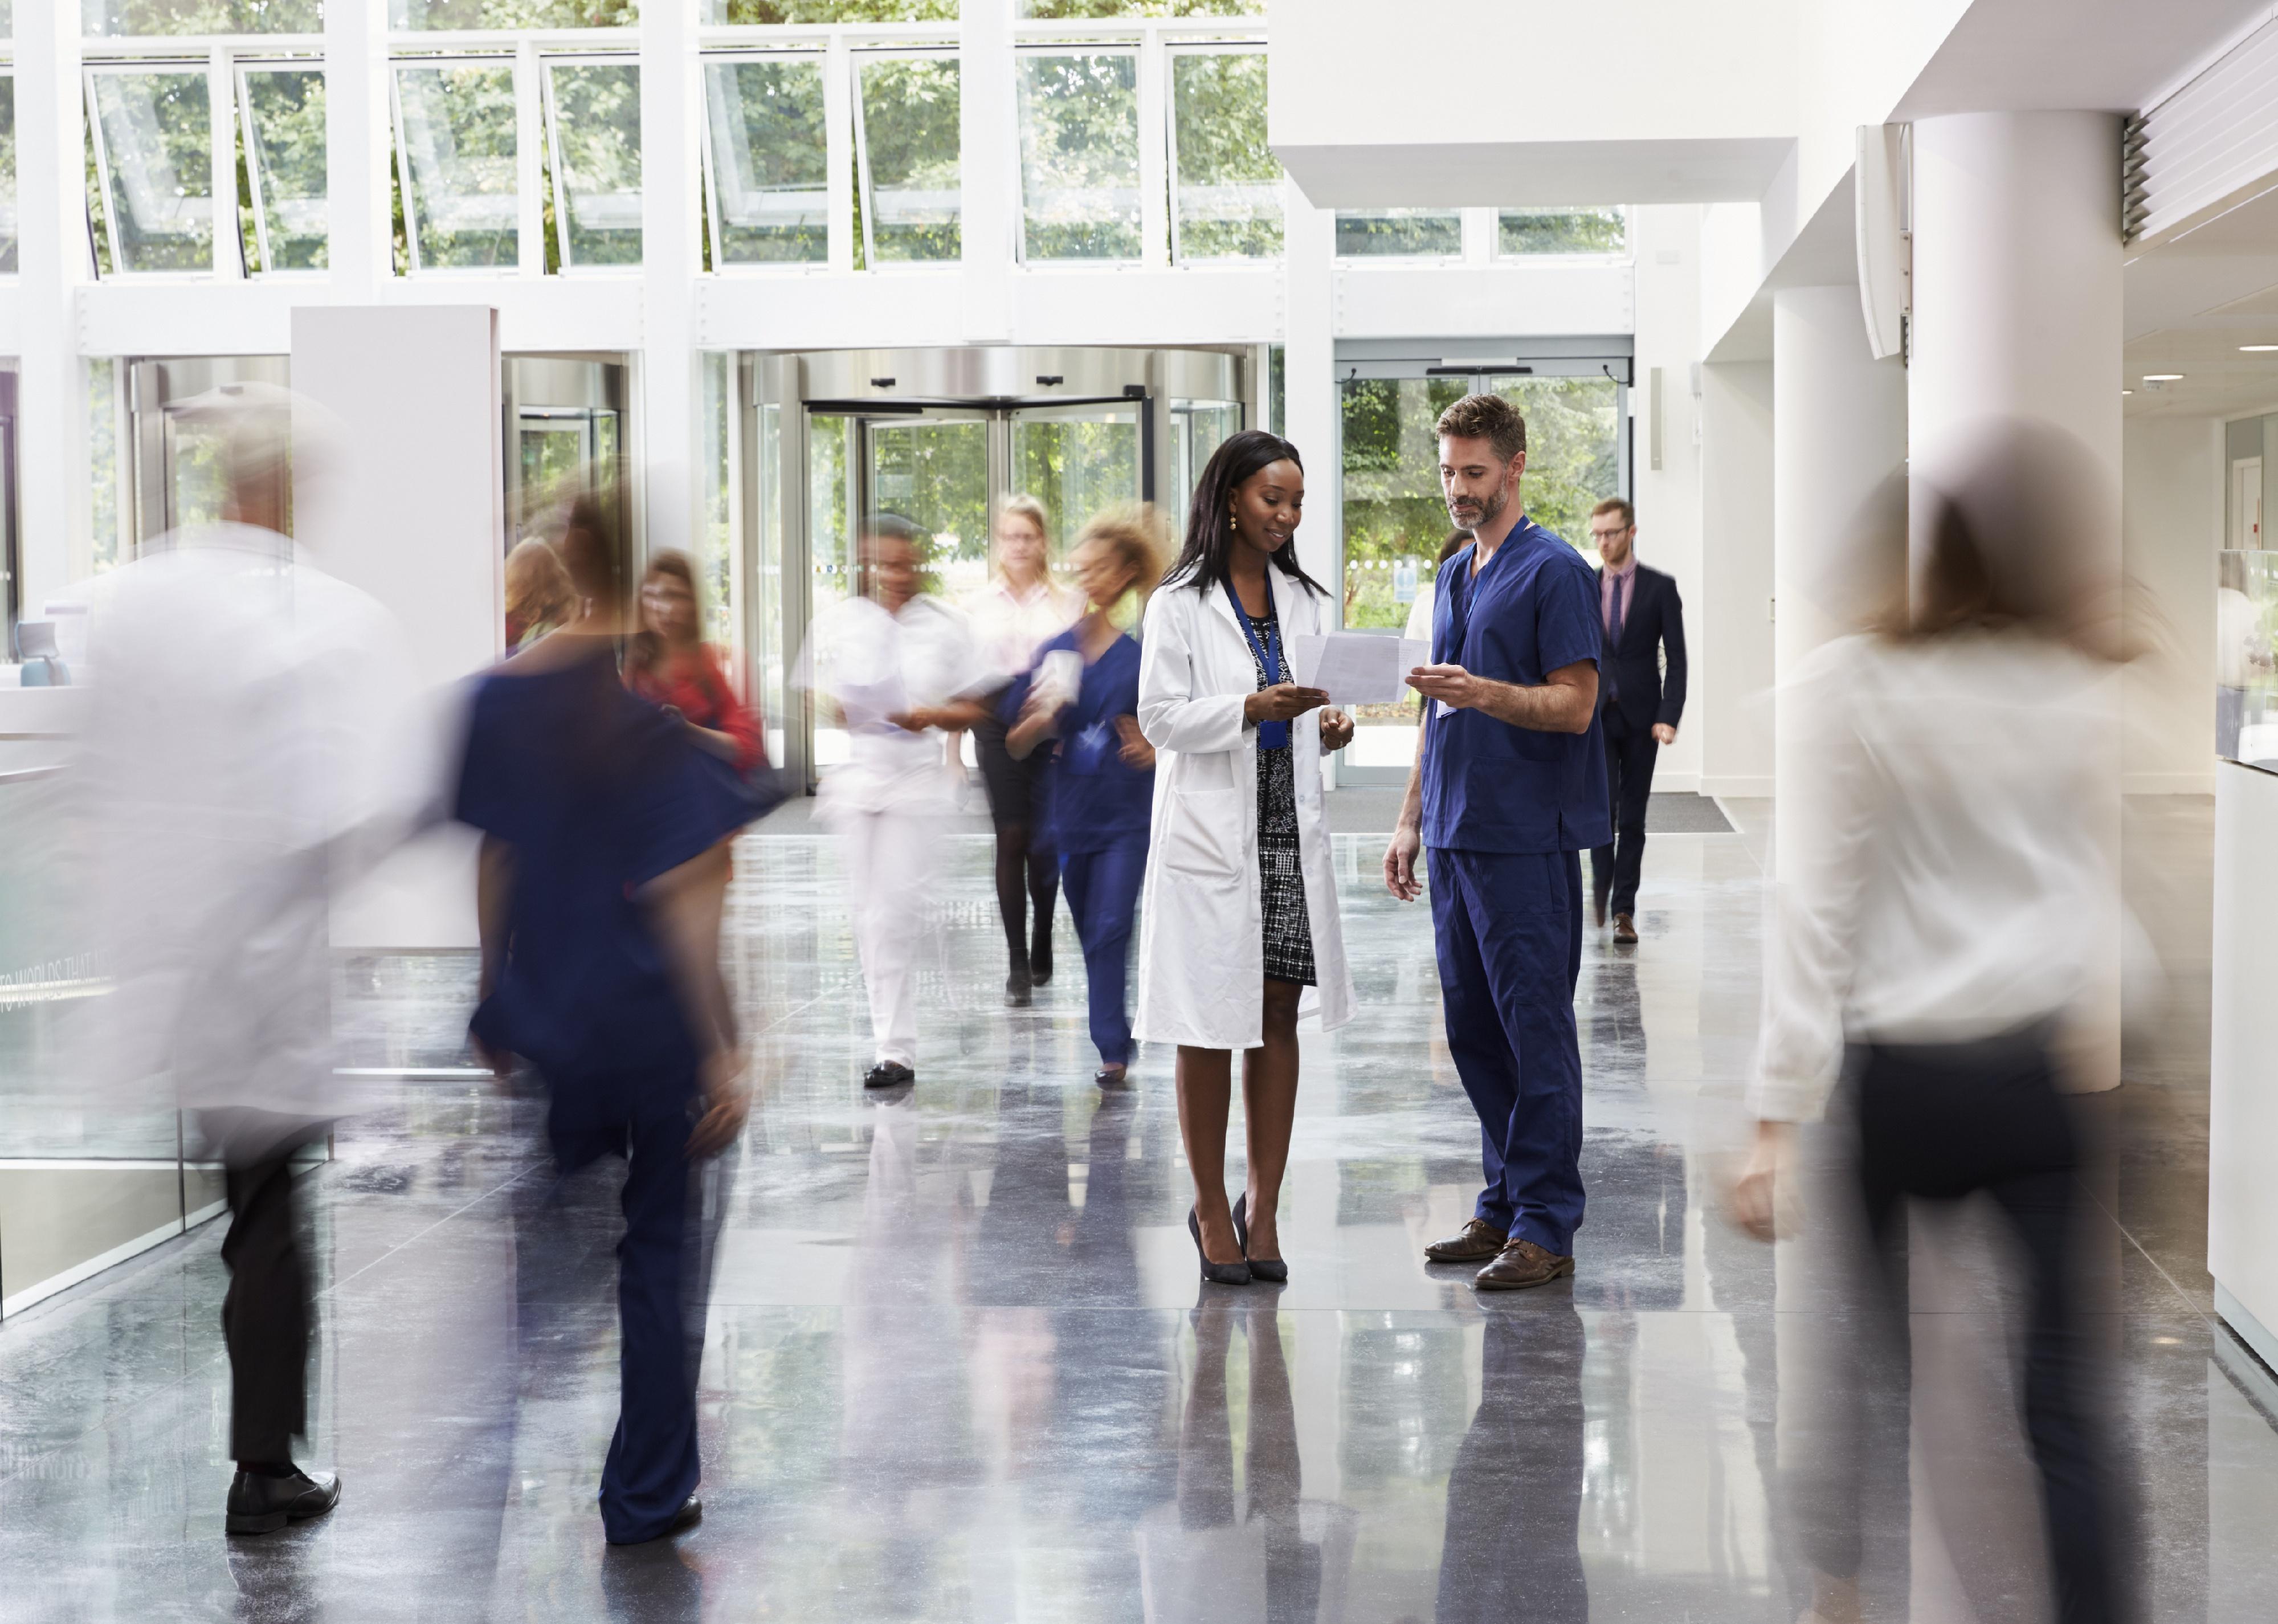 Staff in a busy lobby of modern hospital.